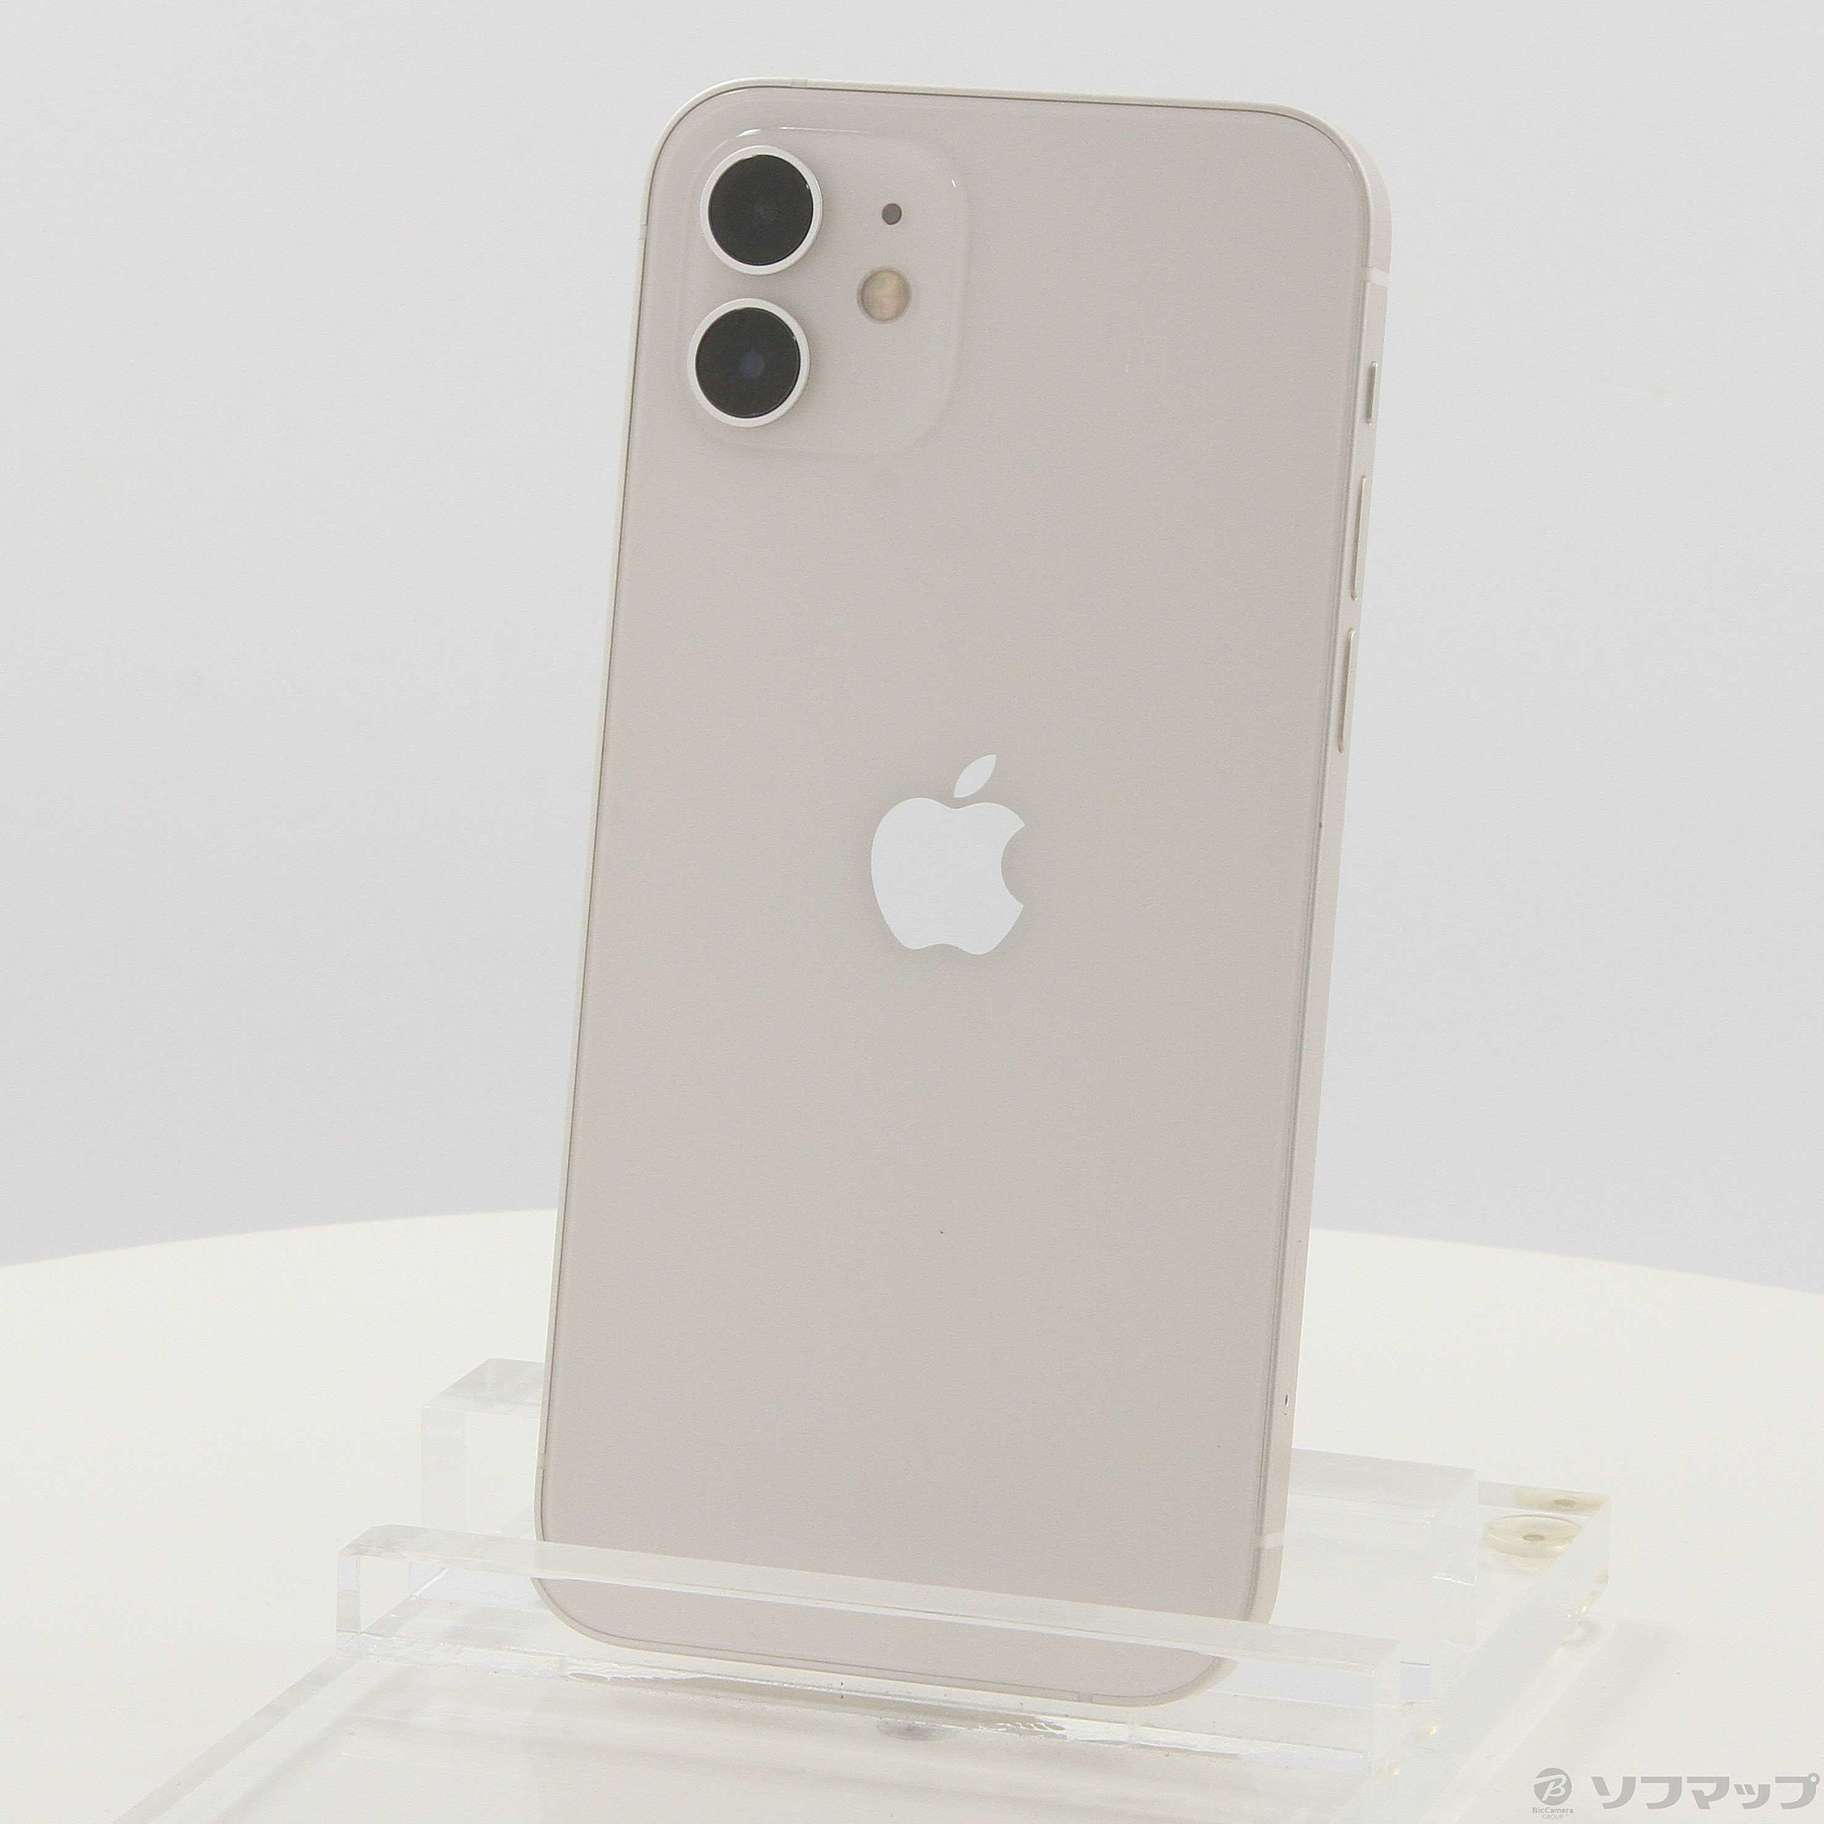 iPhone 12 64GB SIMフリー [ホワイト] 中古(白ロム)価格比較 - 価格 